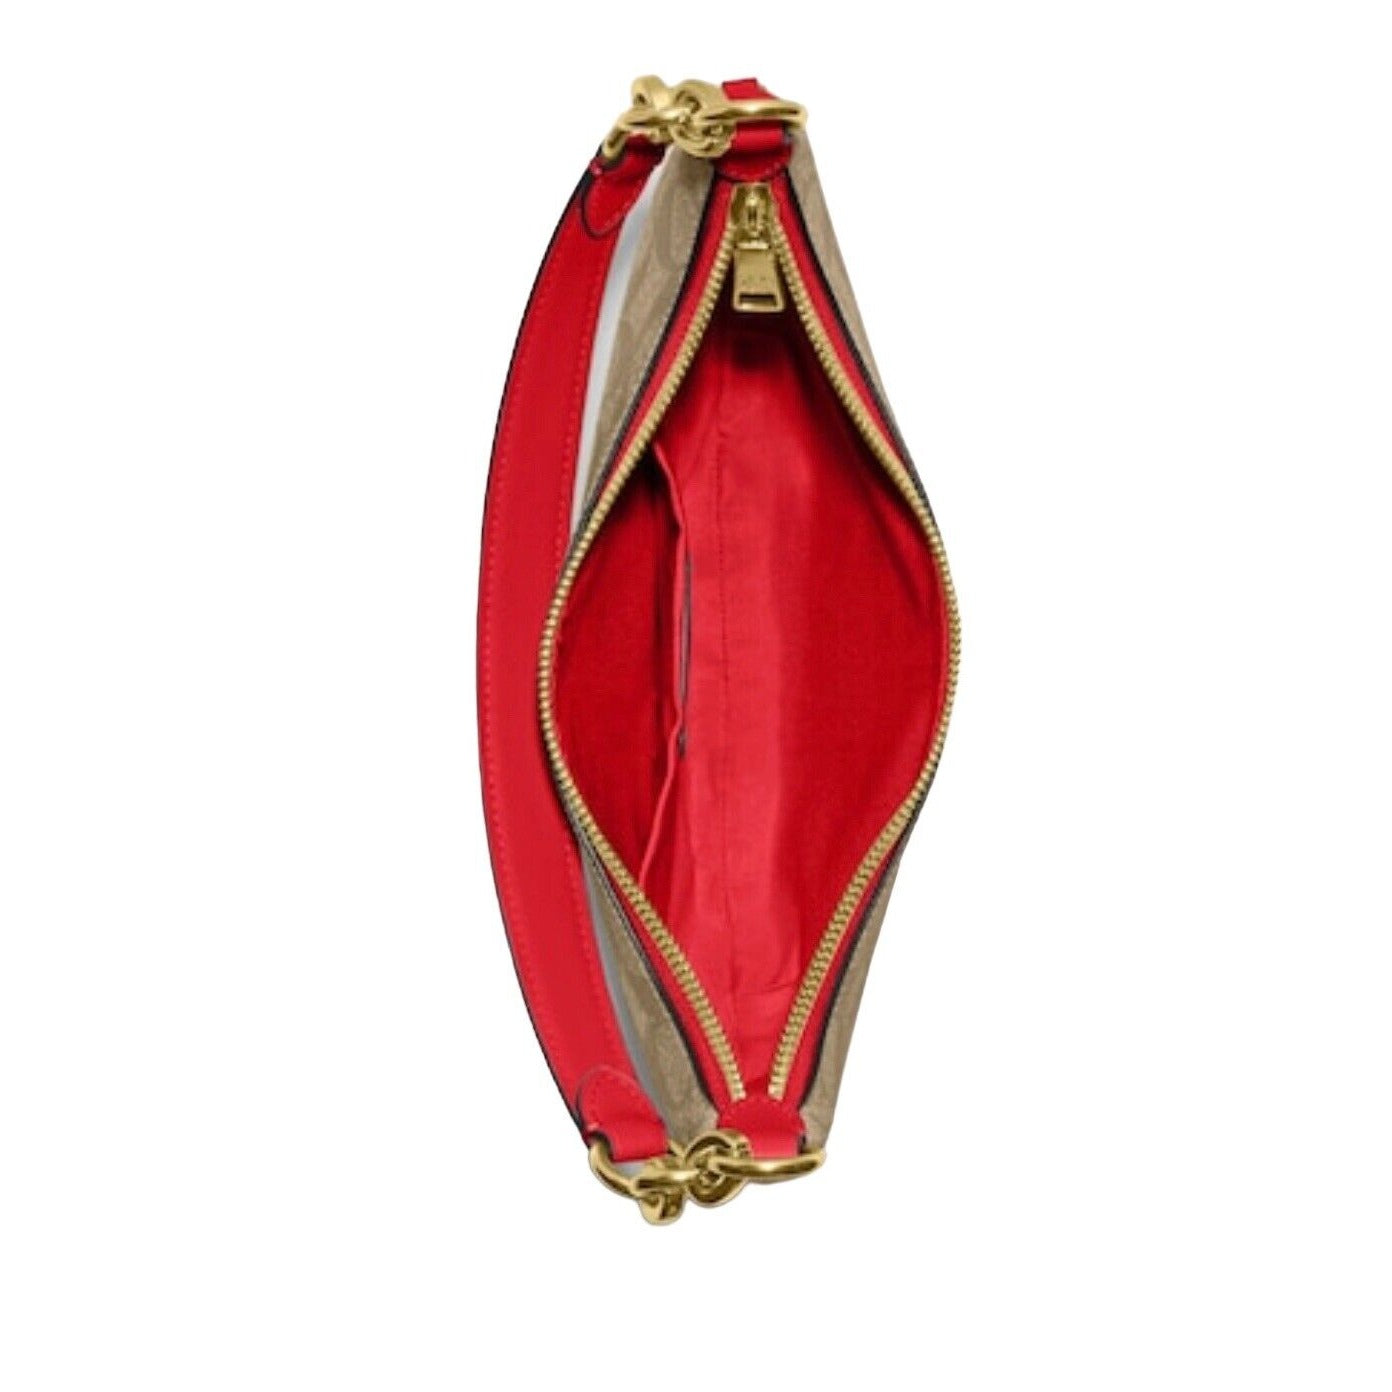 Red Inner Lining Of Hobo Handbag